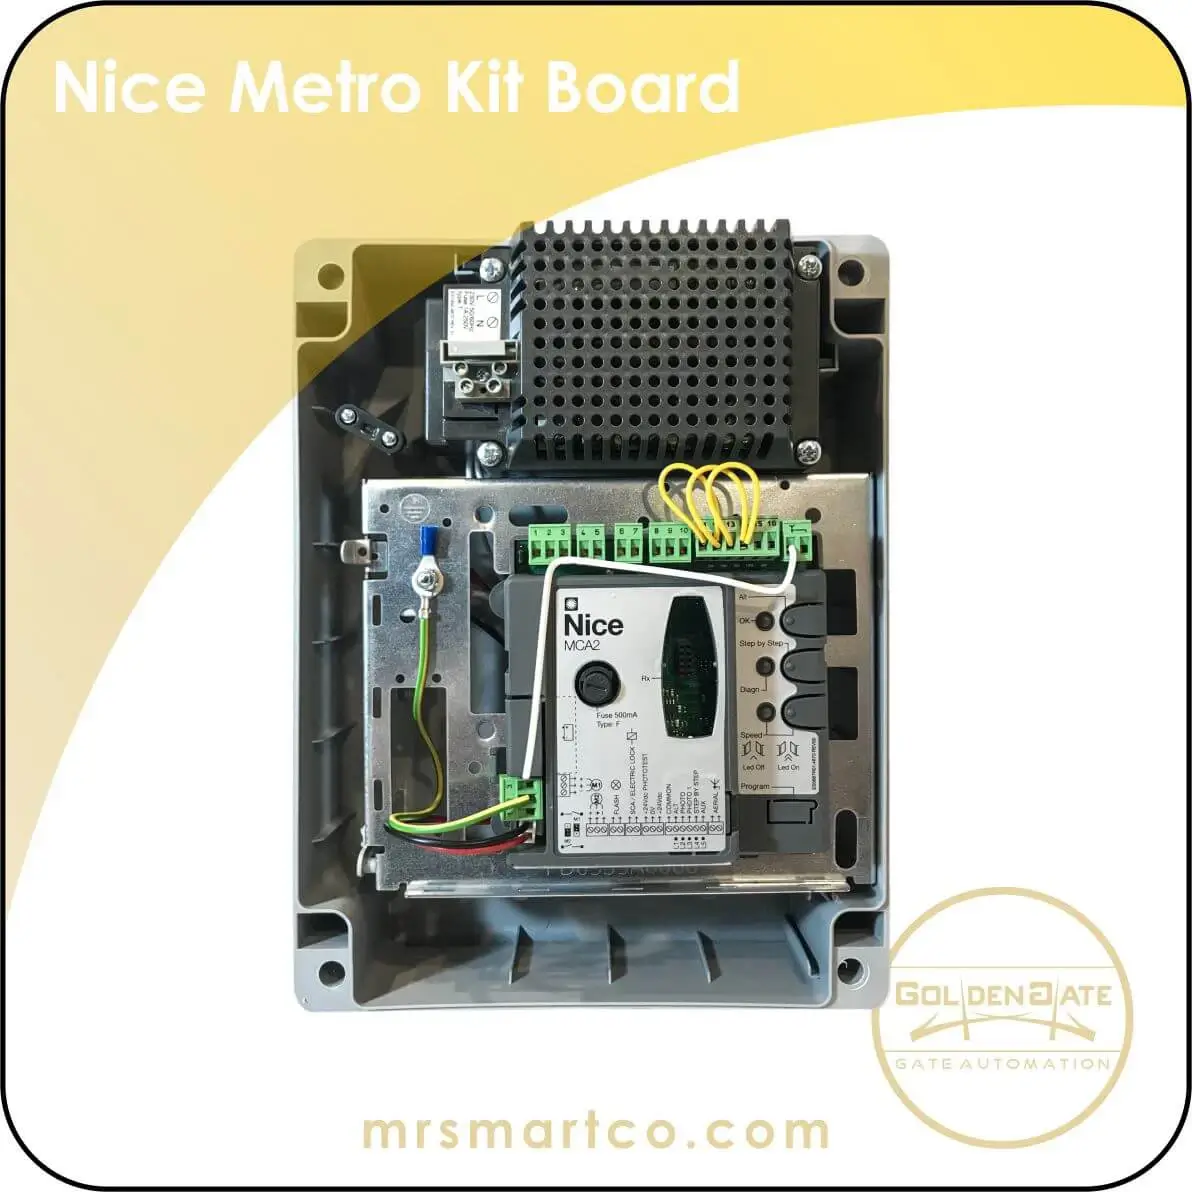 Nice Metro kit board